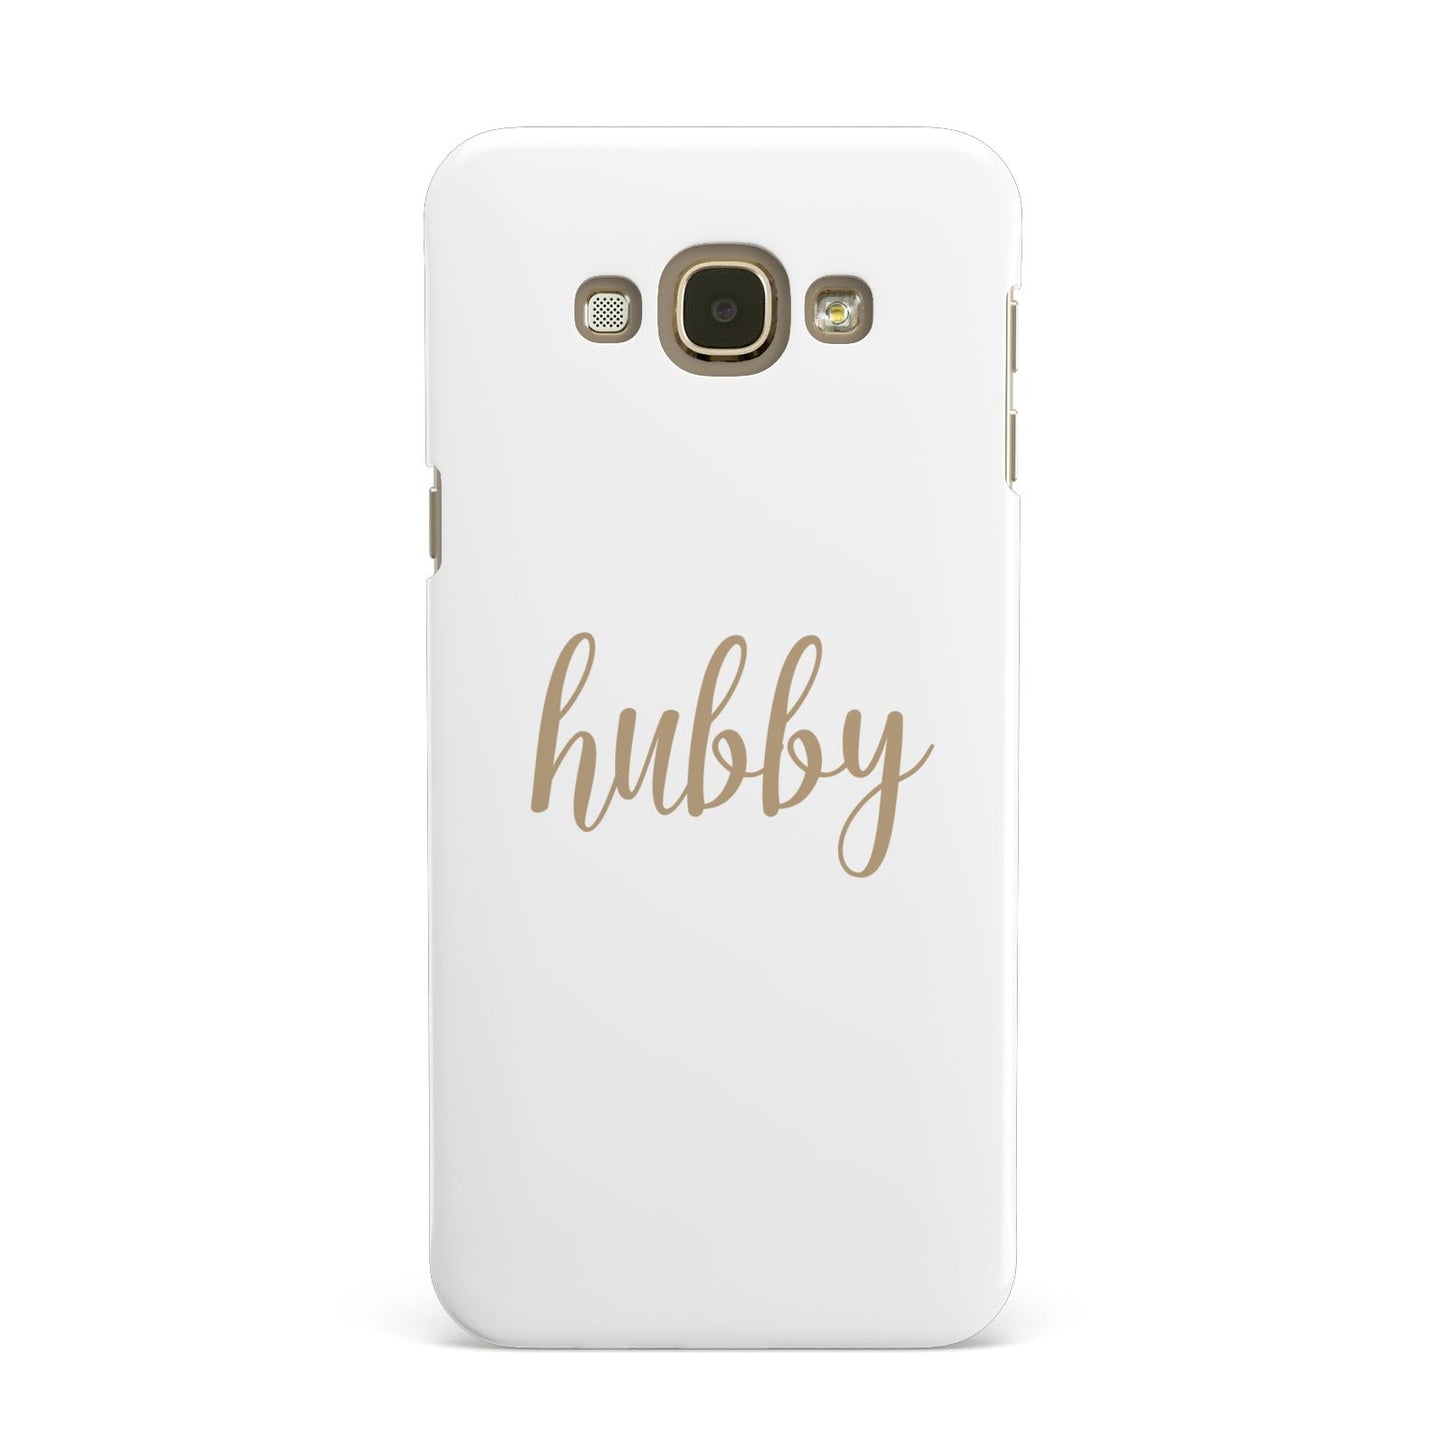 Hubby Samsung Galaxy A8 Case